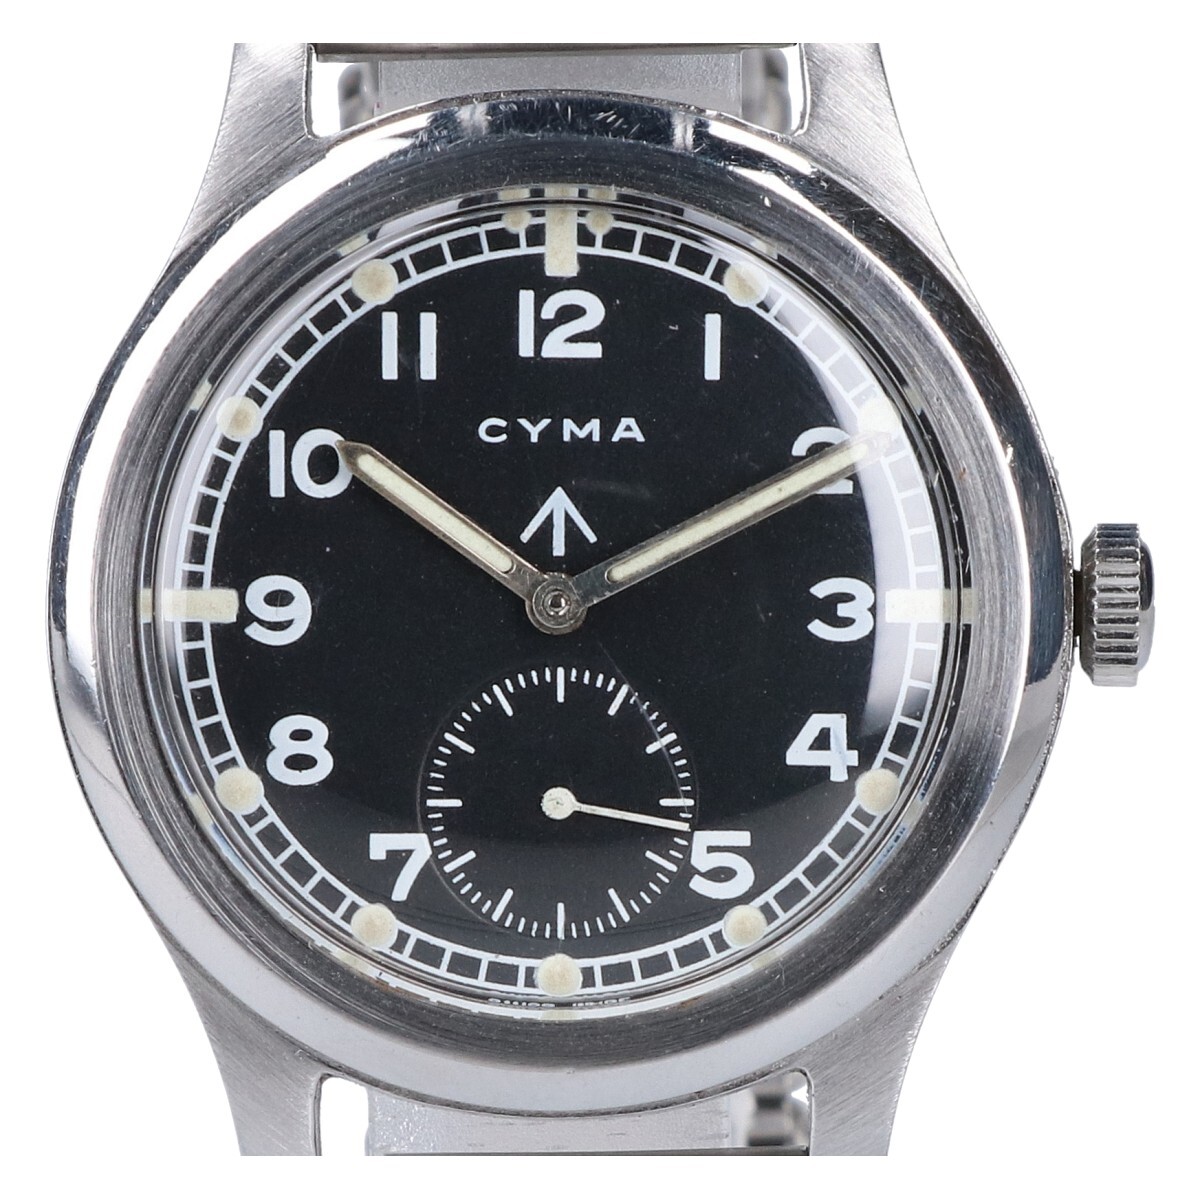 CYMA Cima da-ti dozen England army 1940 period li Dan face hand winding wristwatch silver men's 